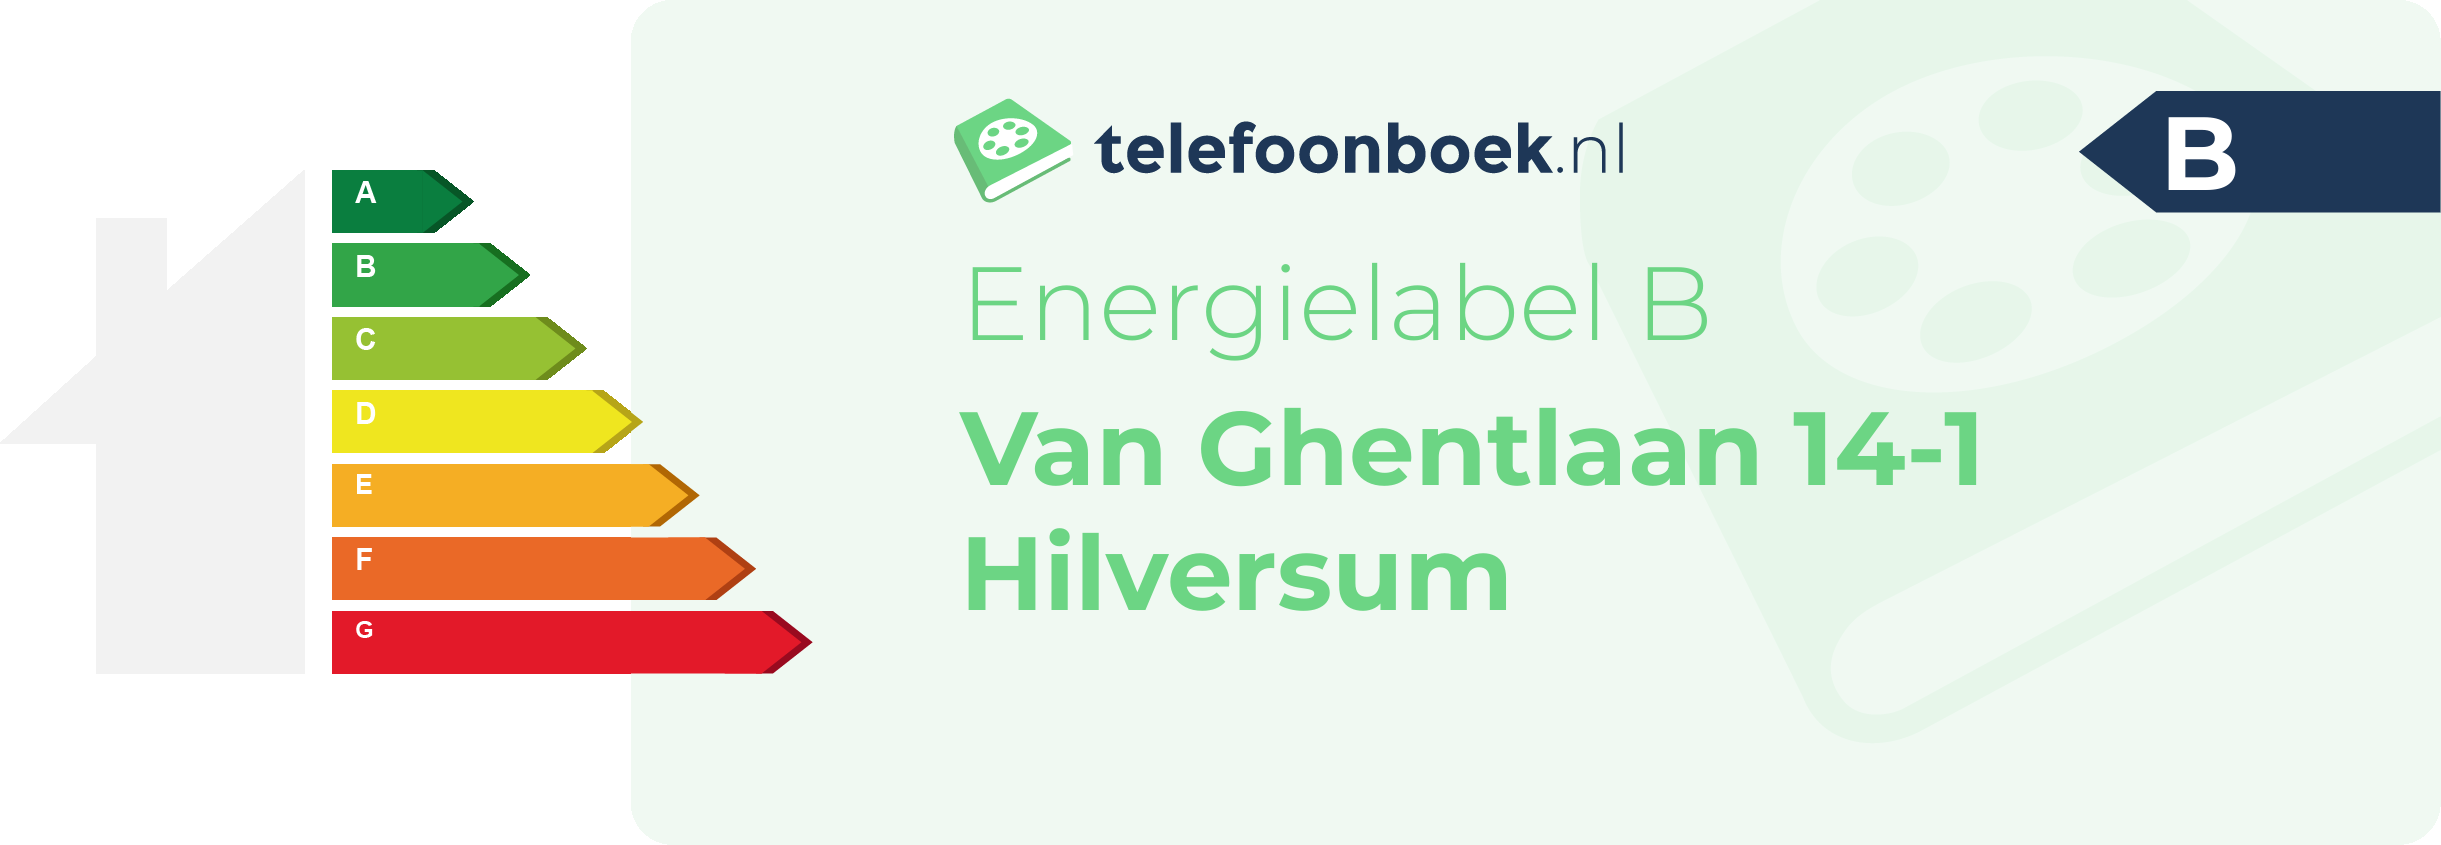 Energielabel Van Ghentlaan 14-1 Hilversum